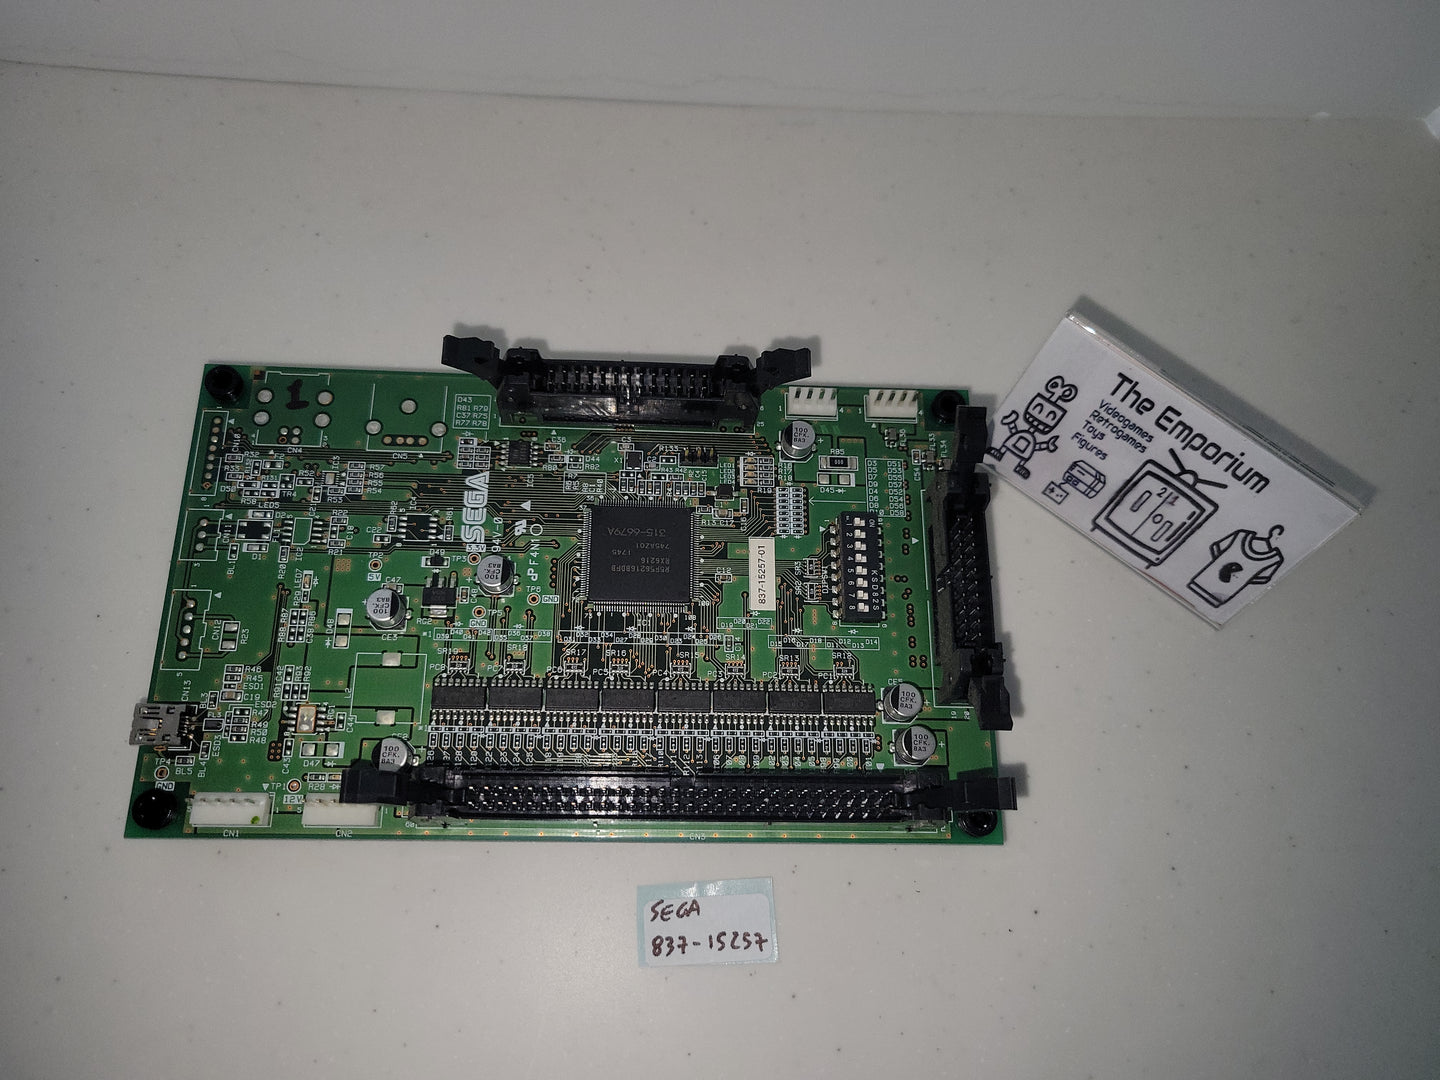 Sega 837-15257 I/O board - Arcade Pcb Printed Circuit Board